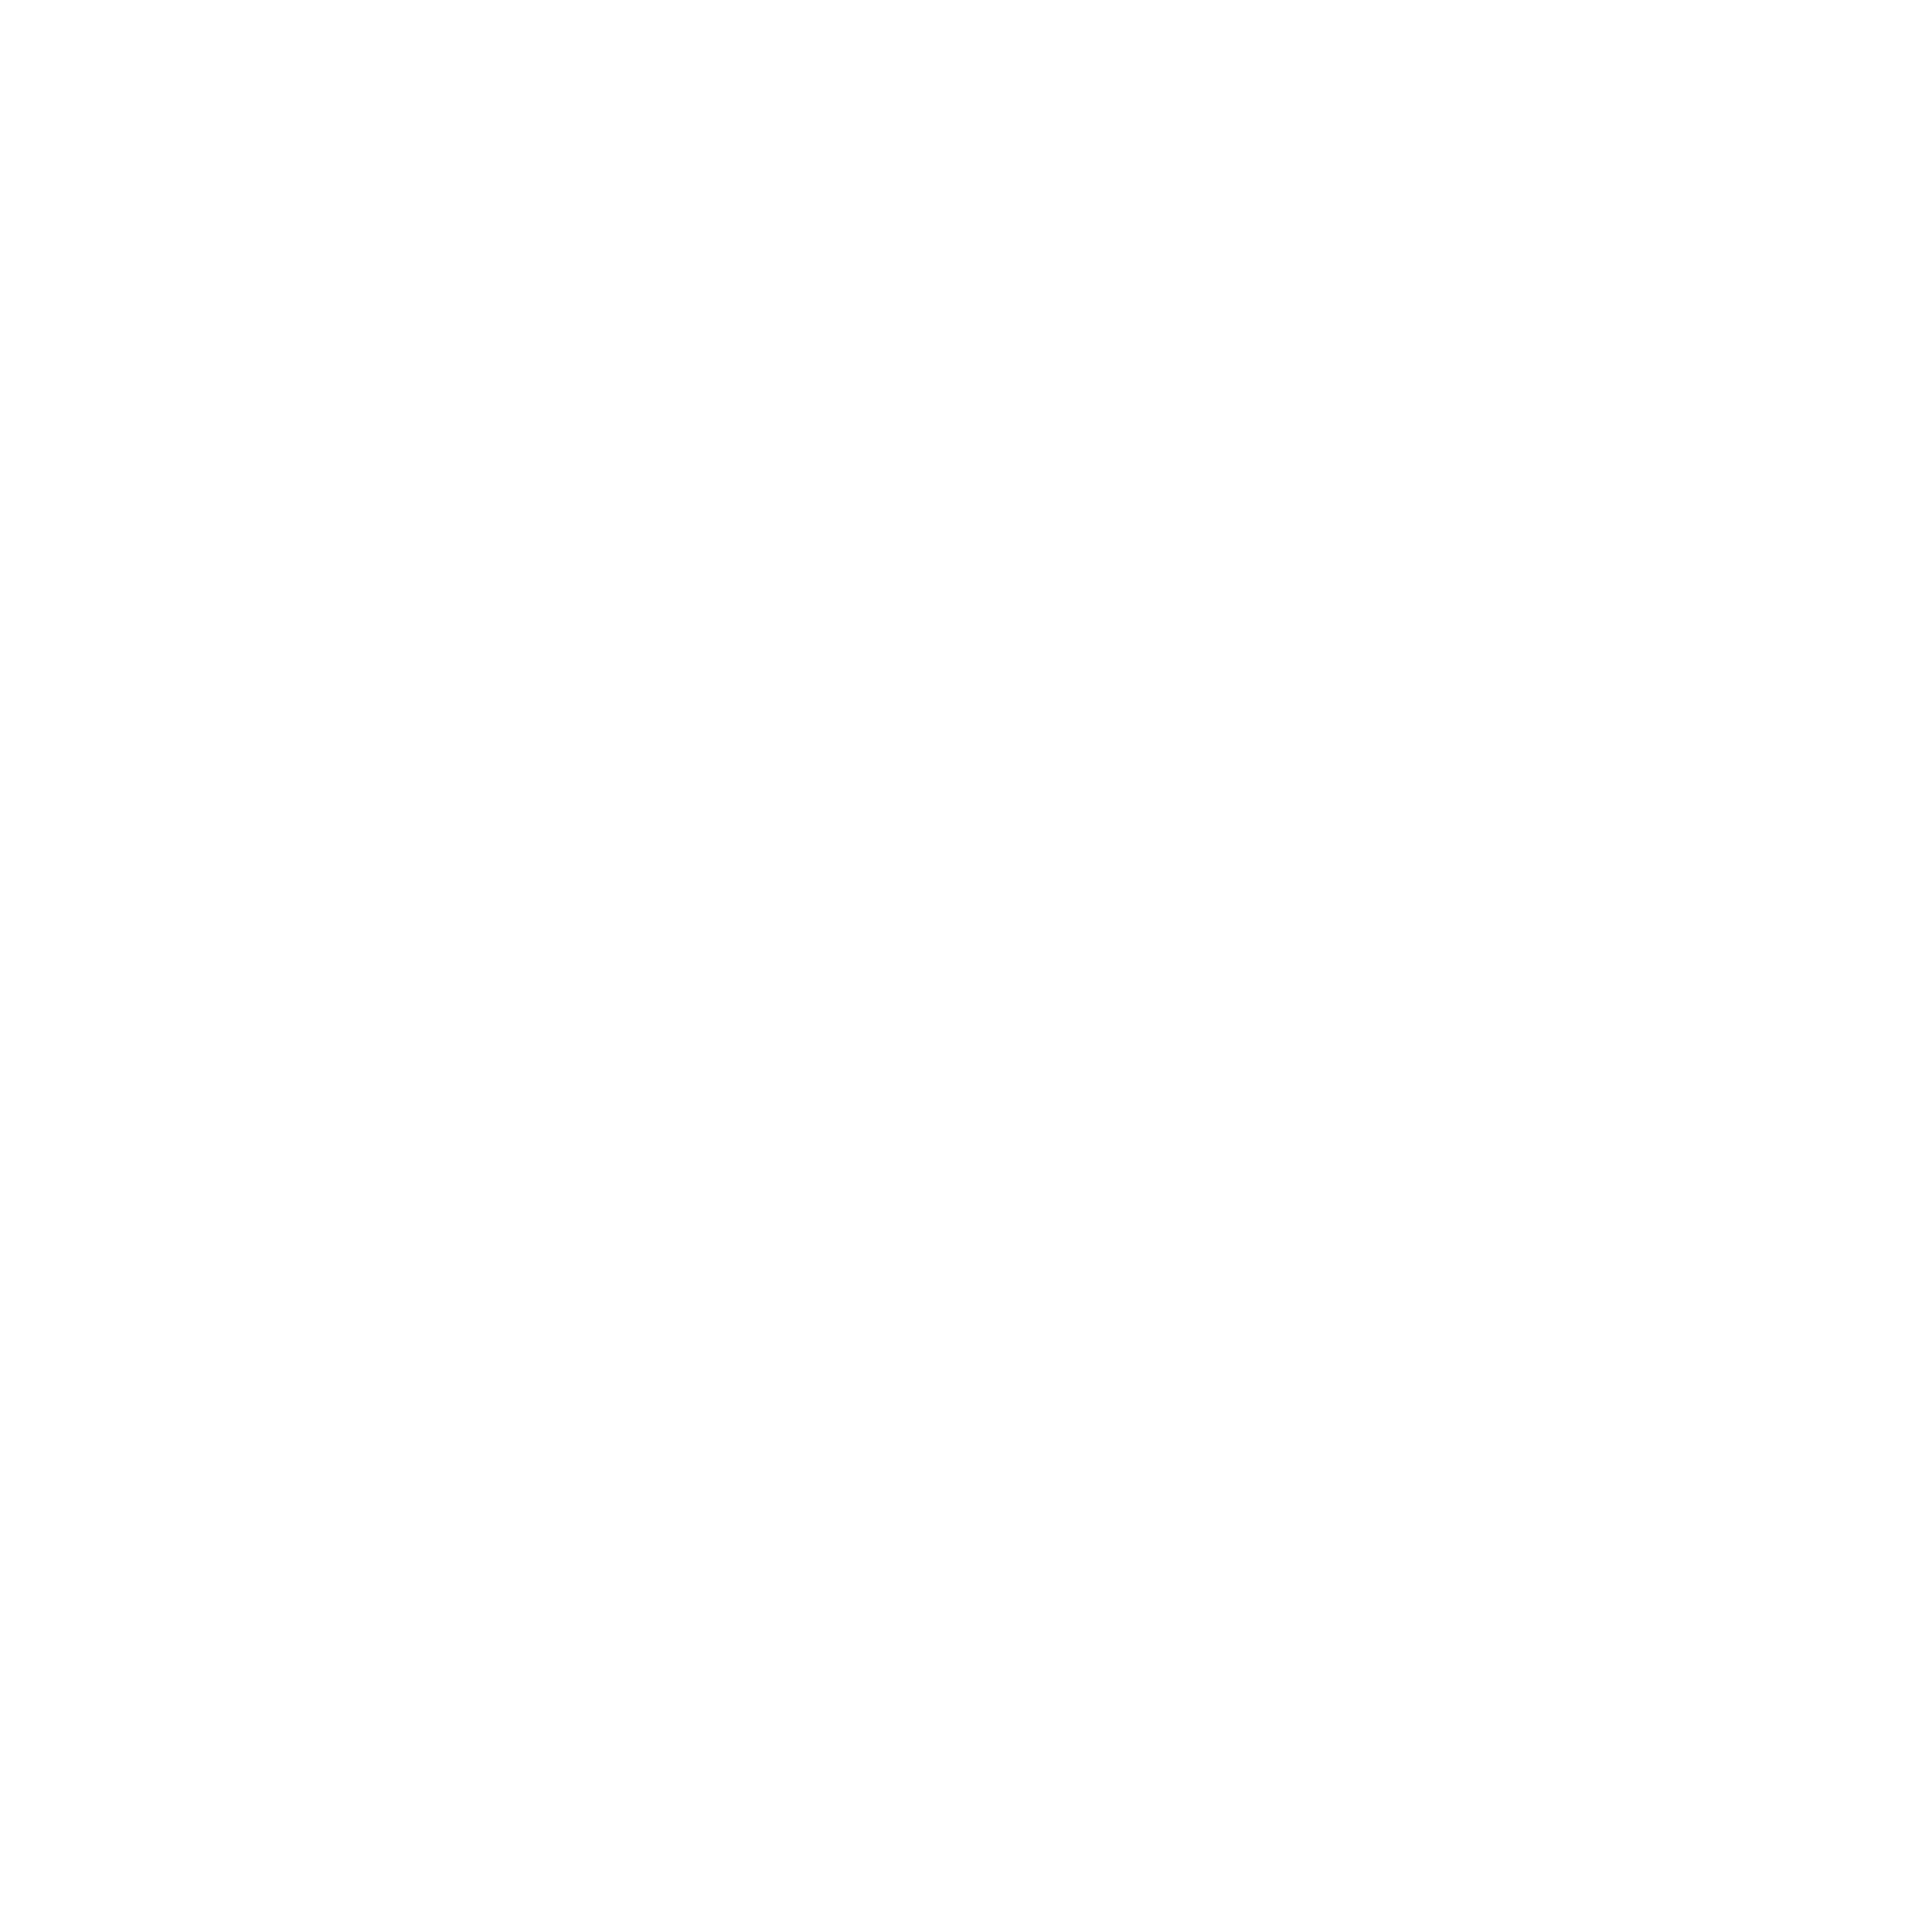 Ōmata School